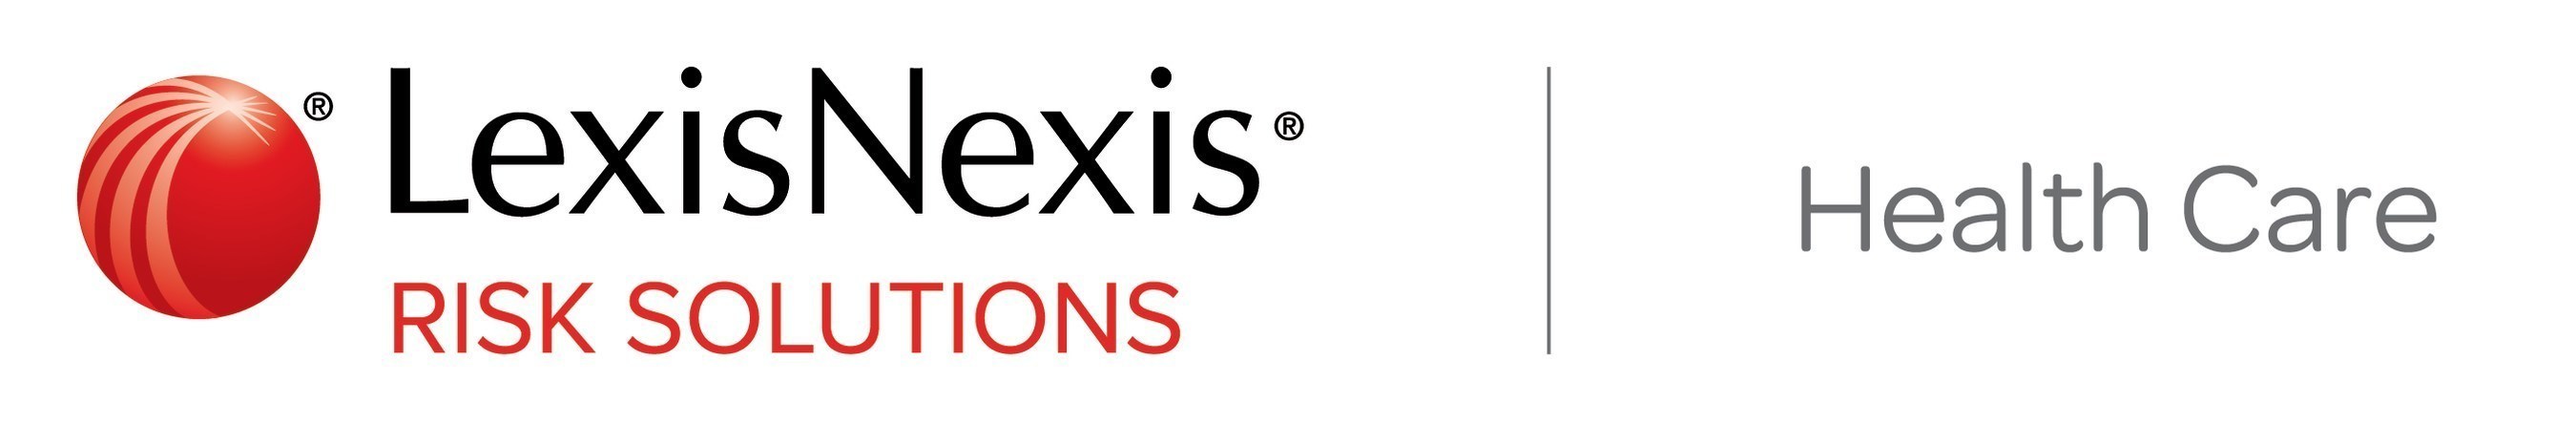 LexisNexis Risk Solutions Health Care